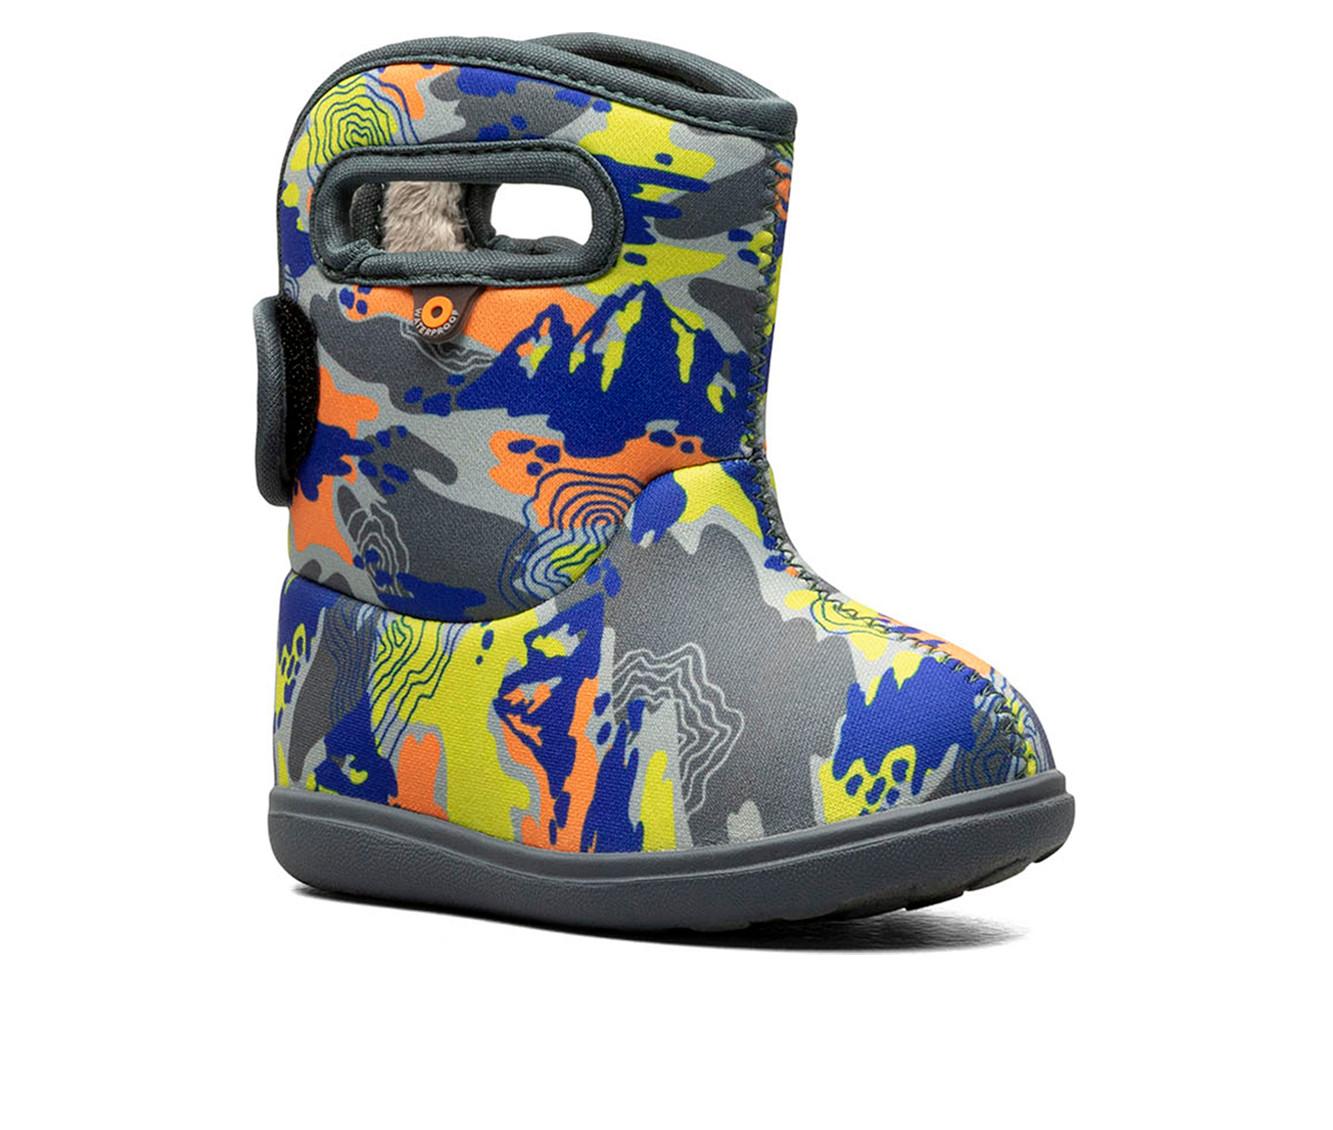 Boys' Bogs Footwear Toddler Bogs II Top Camo Rain Boots